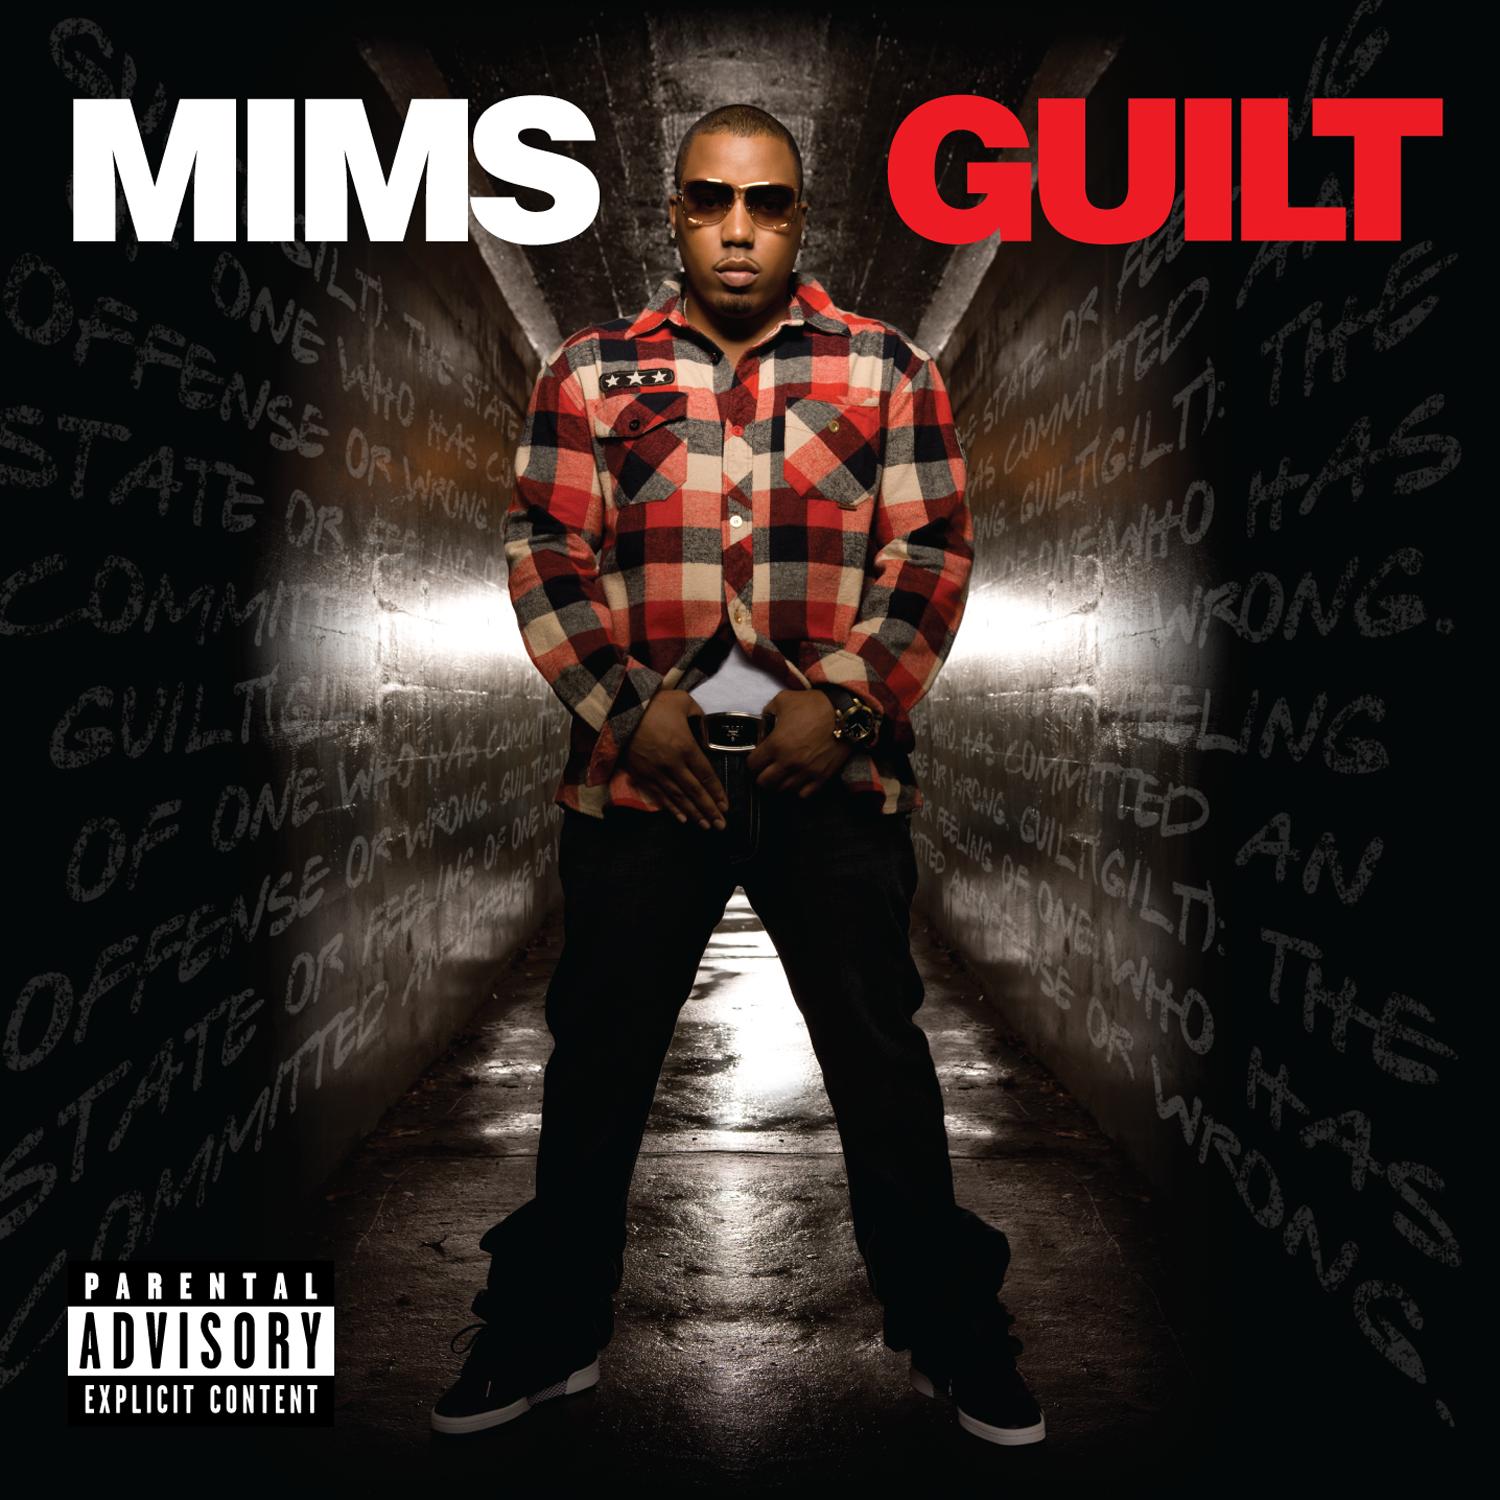 MIMS – Guilt (Official Album Cover) | HipHop-N-More